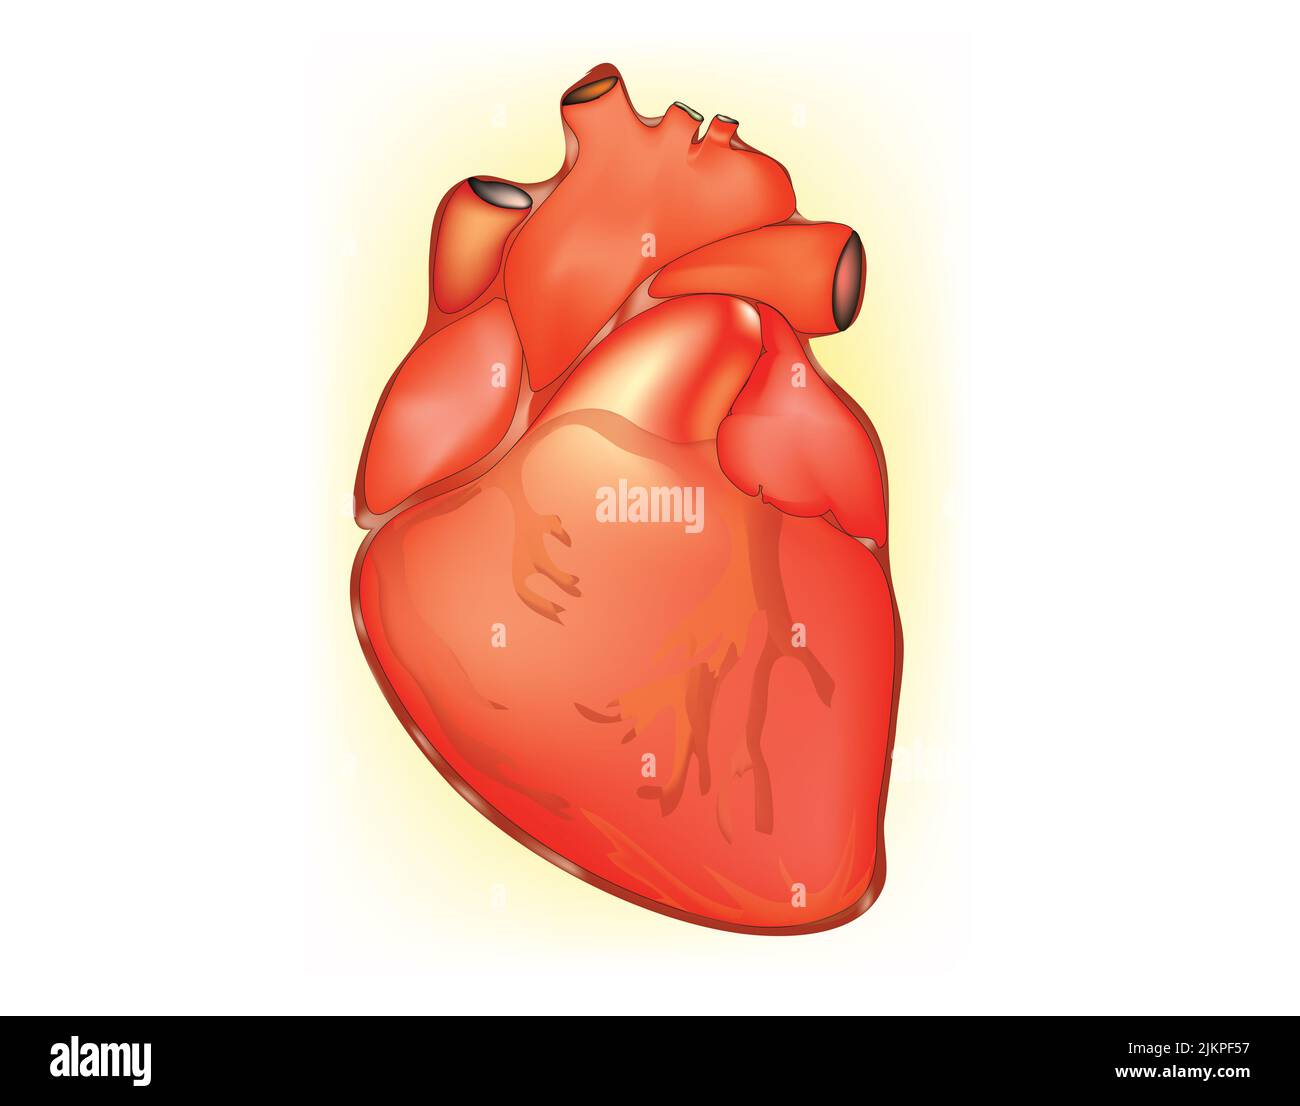 Heart anatomy Stock Photo